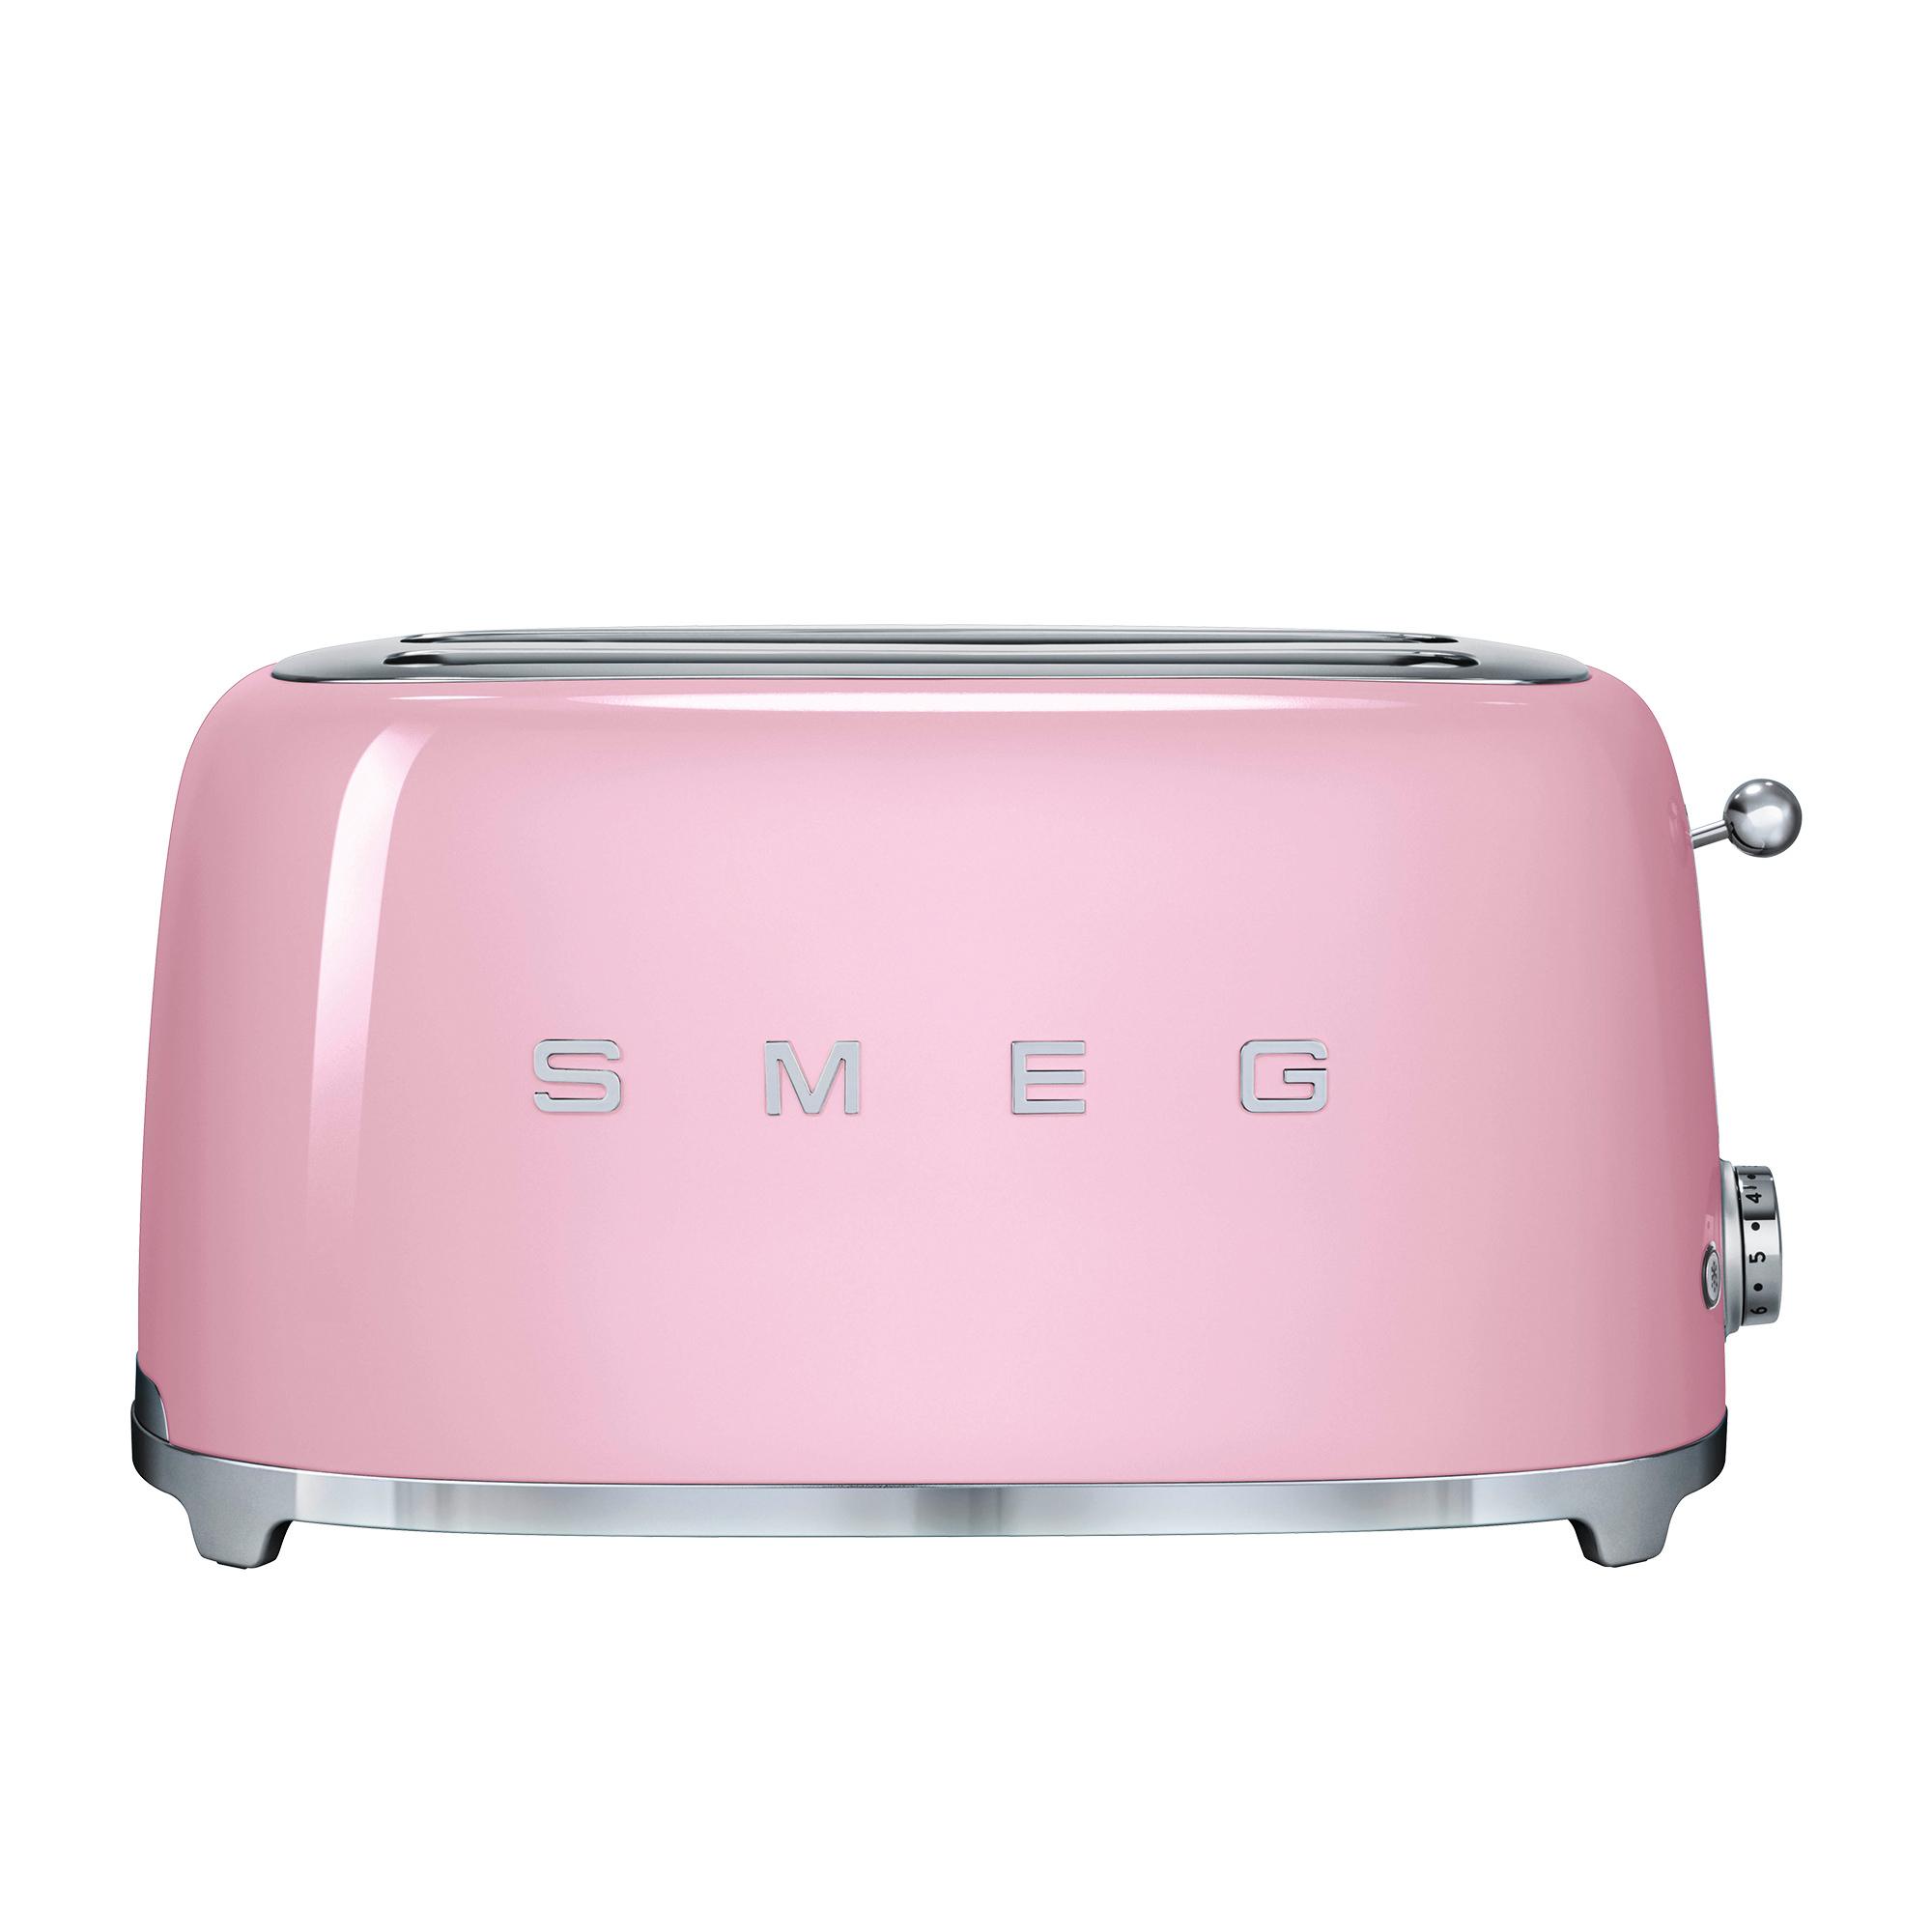 Smeg 50's Retro Style 4 Slice Toaster Pastel Pink Image 3